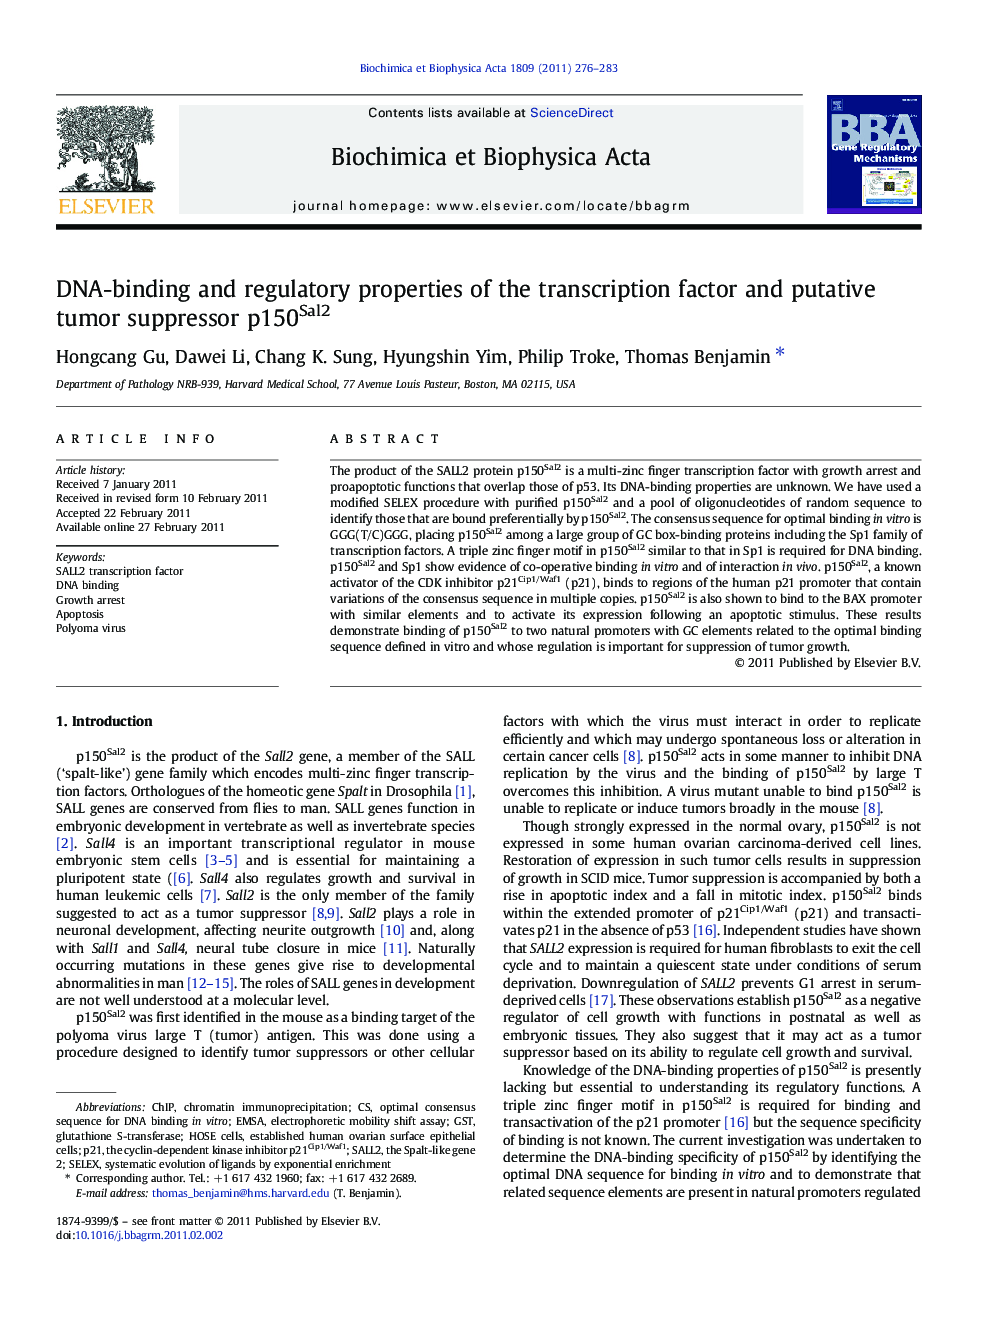 DNA-binding and regulatory properties of the transcription factor and putative tumor suppressor p150Sal2